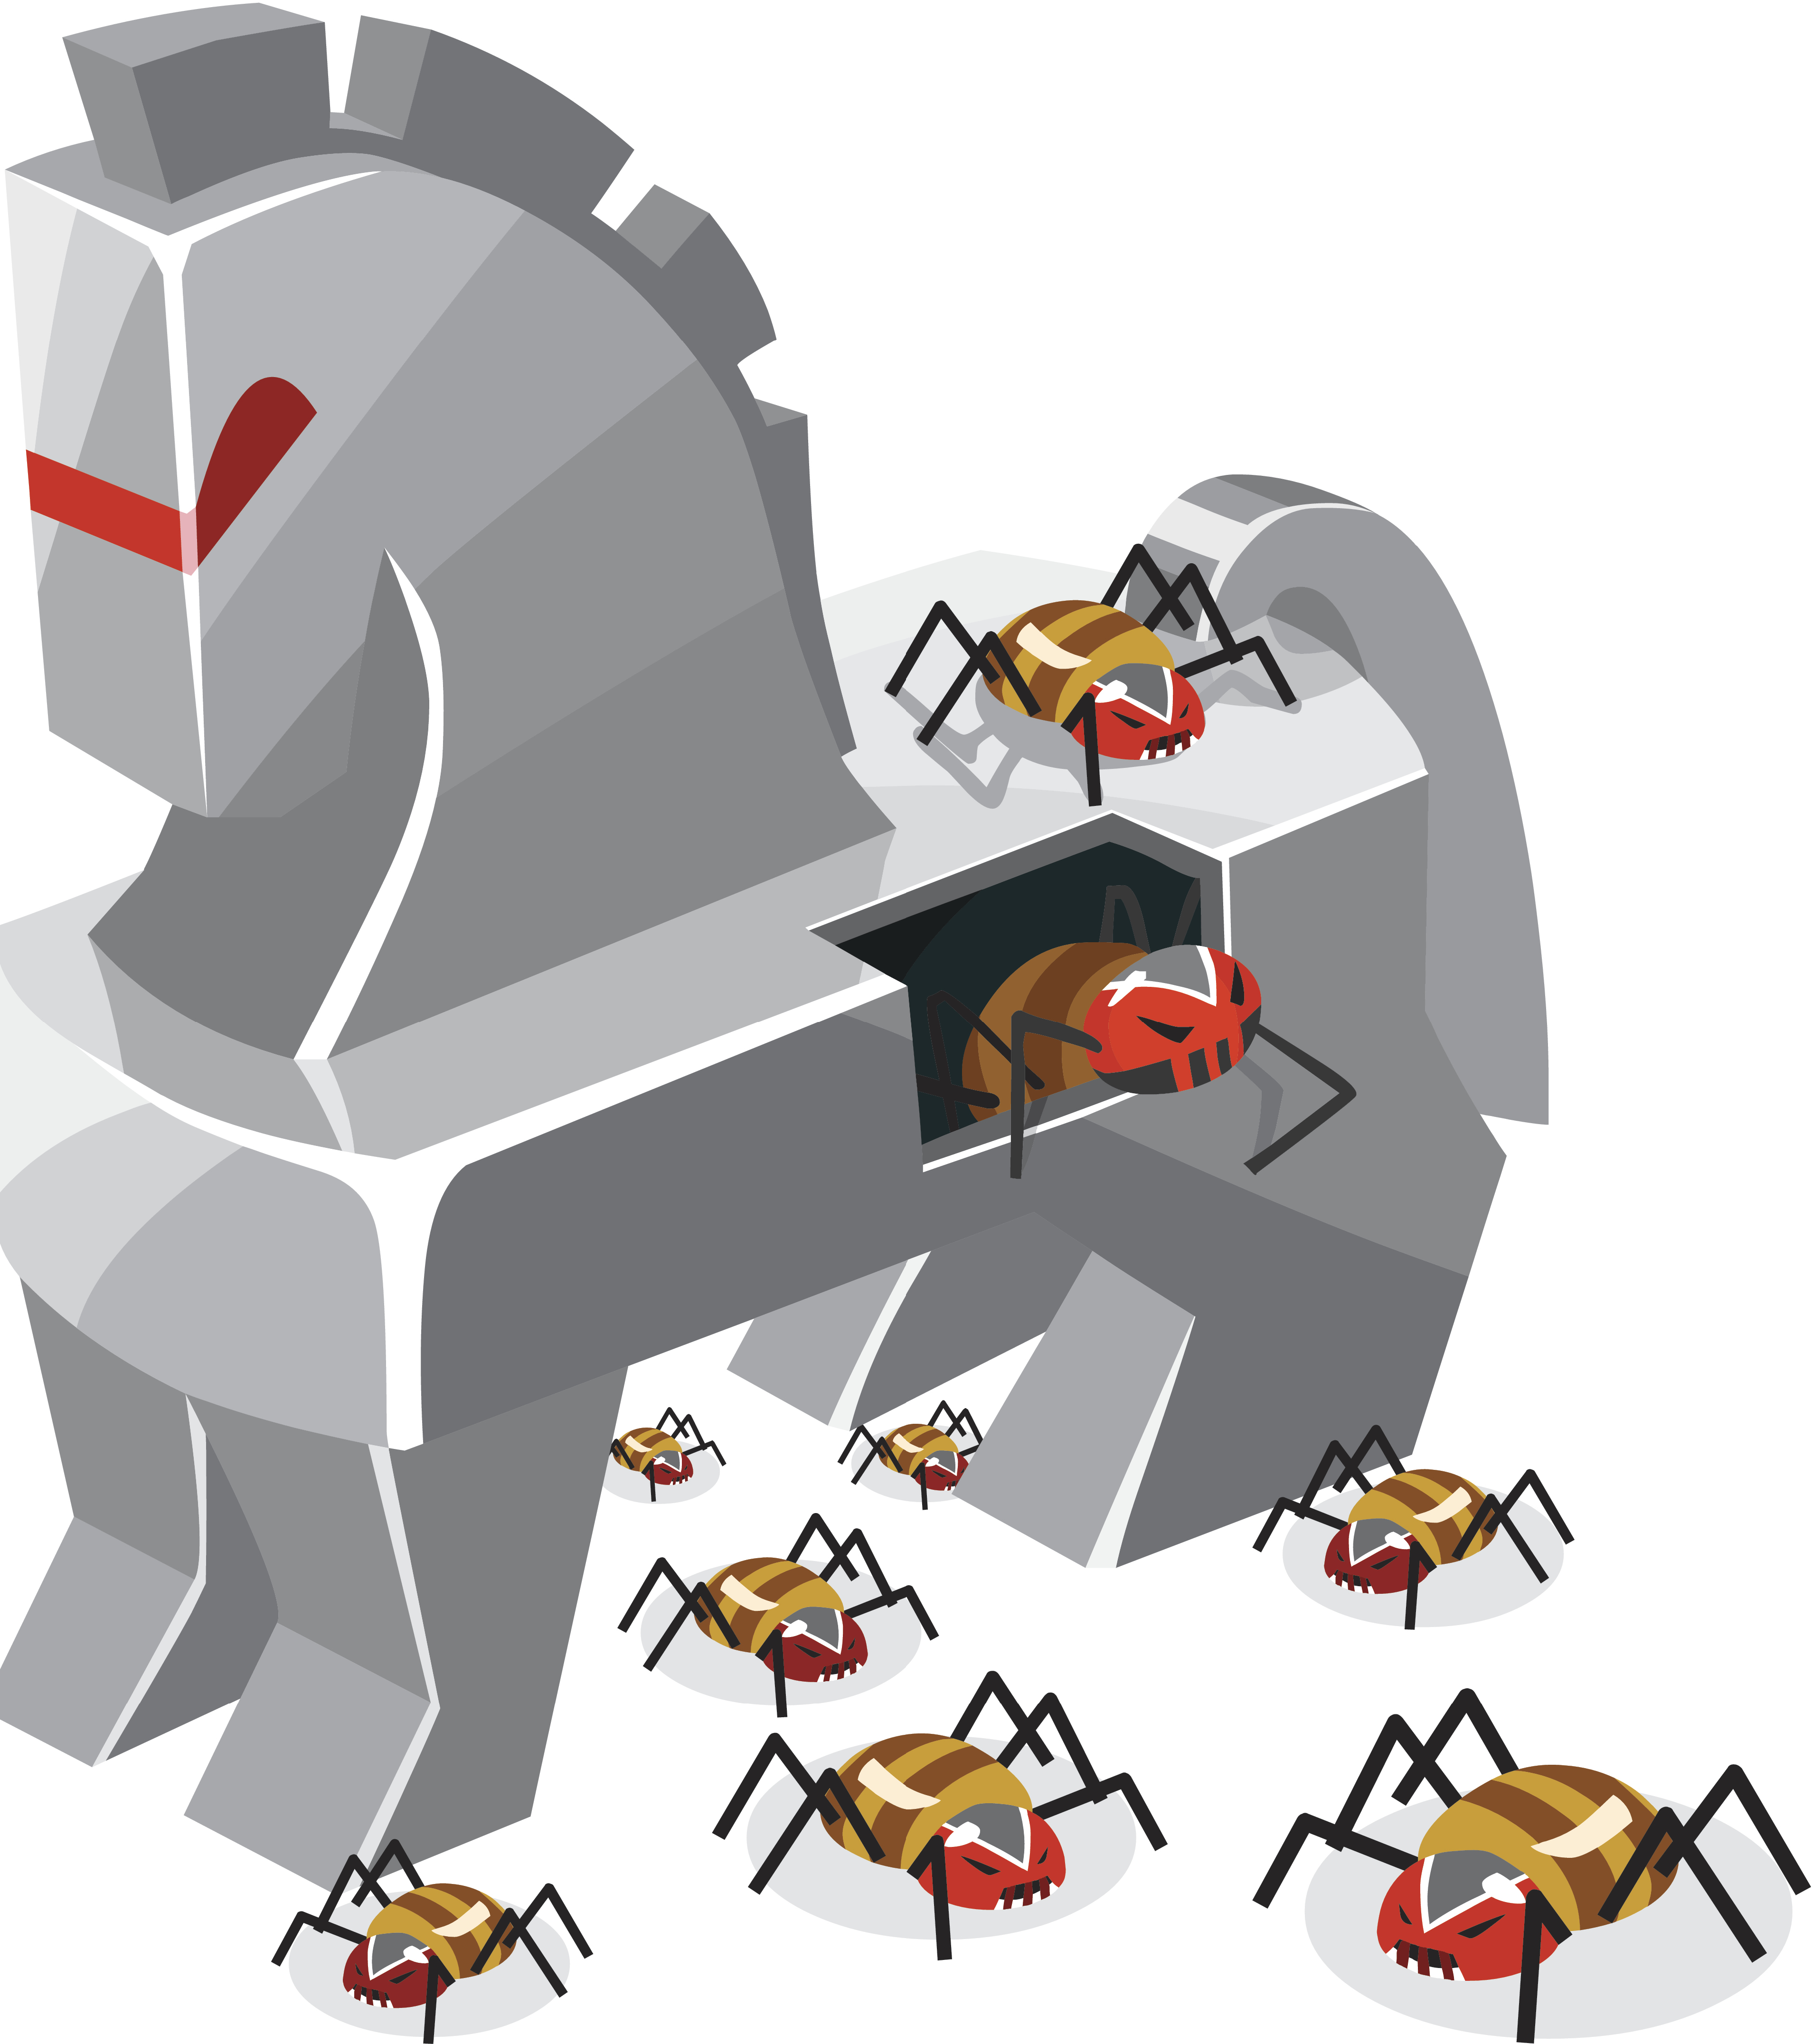 trojan horse computer virus example